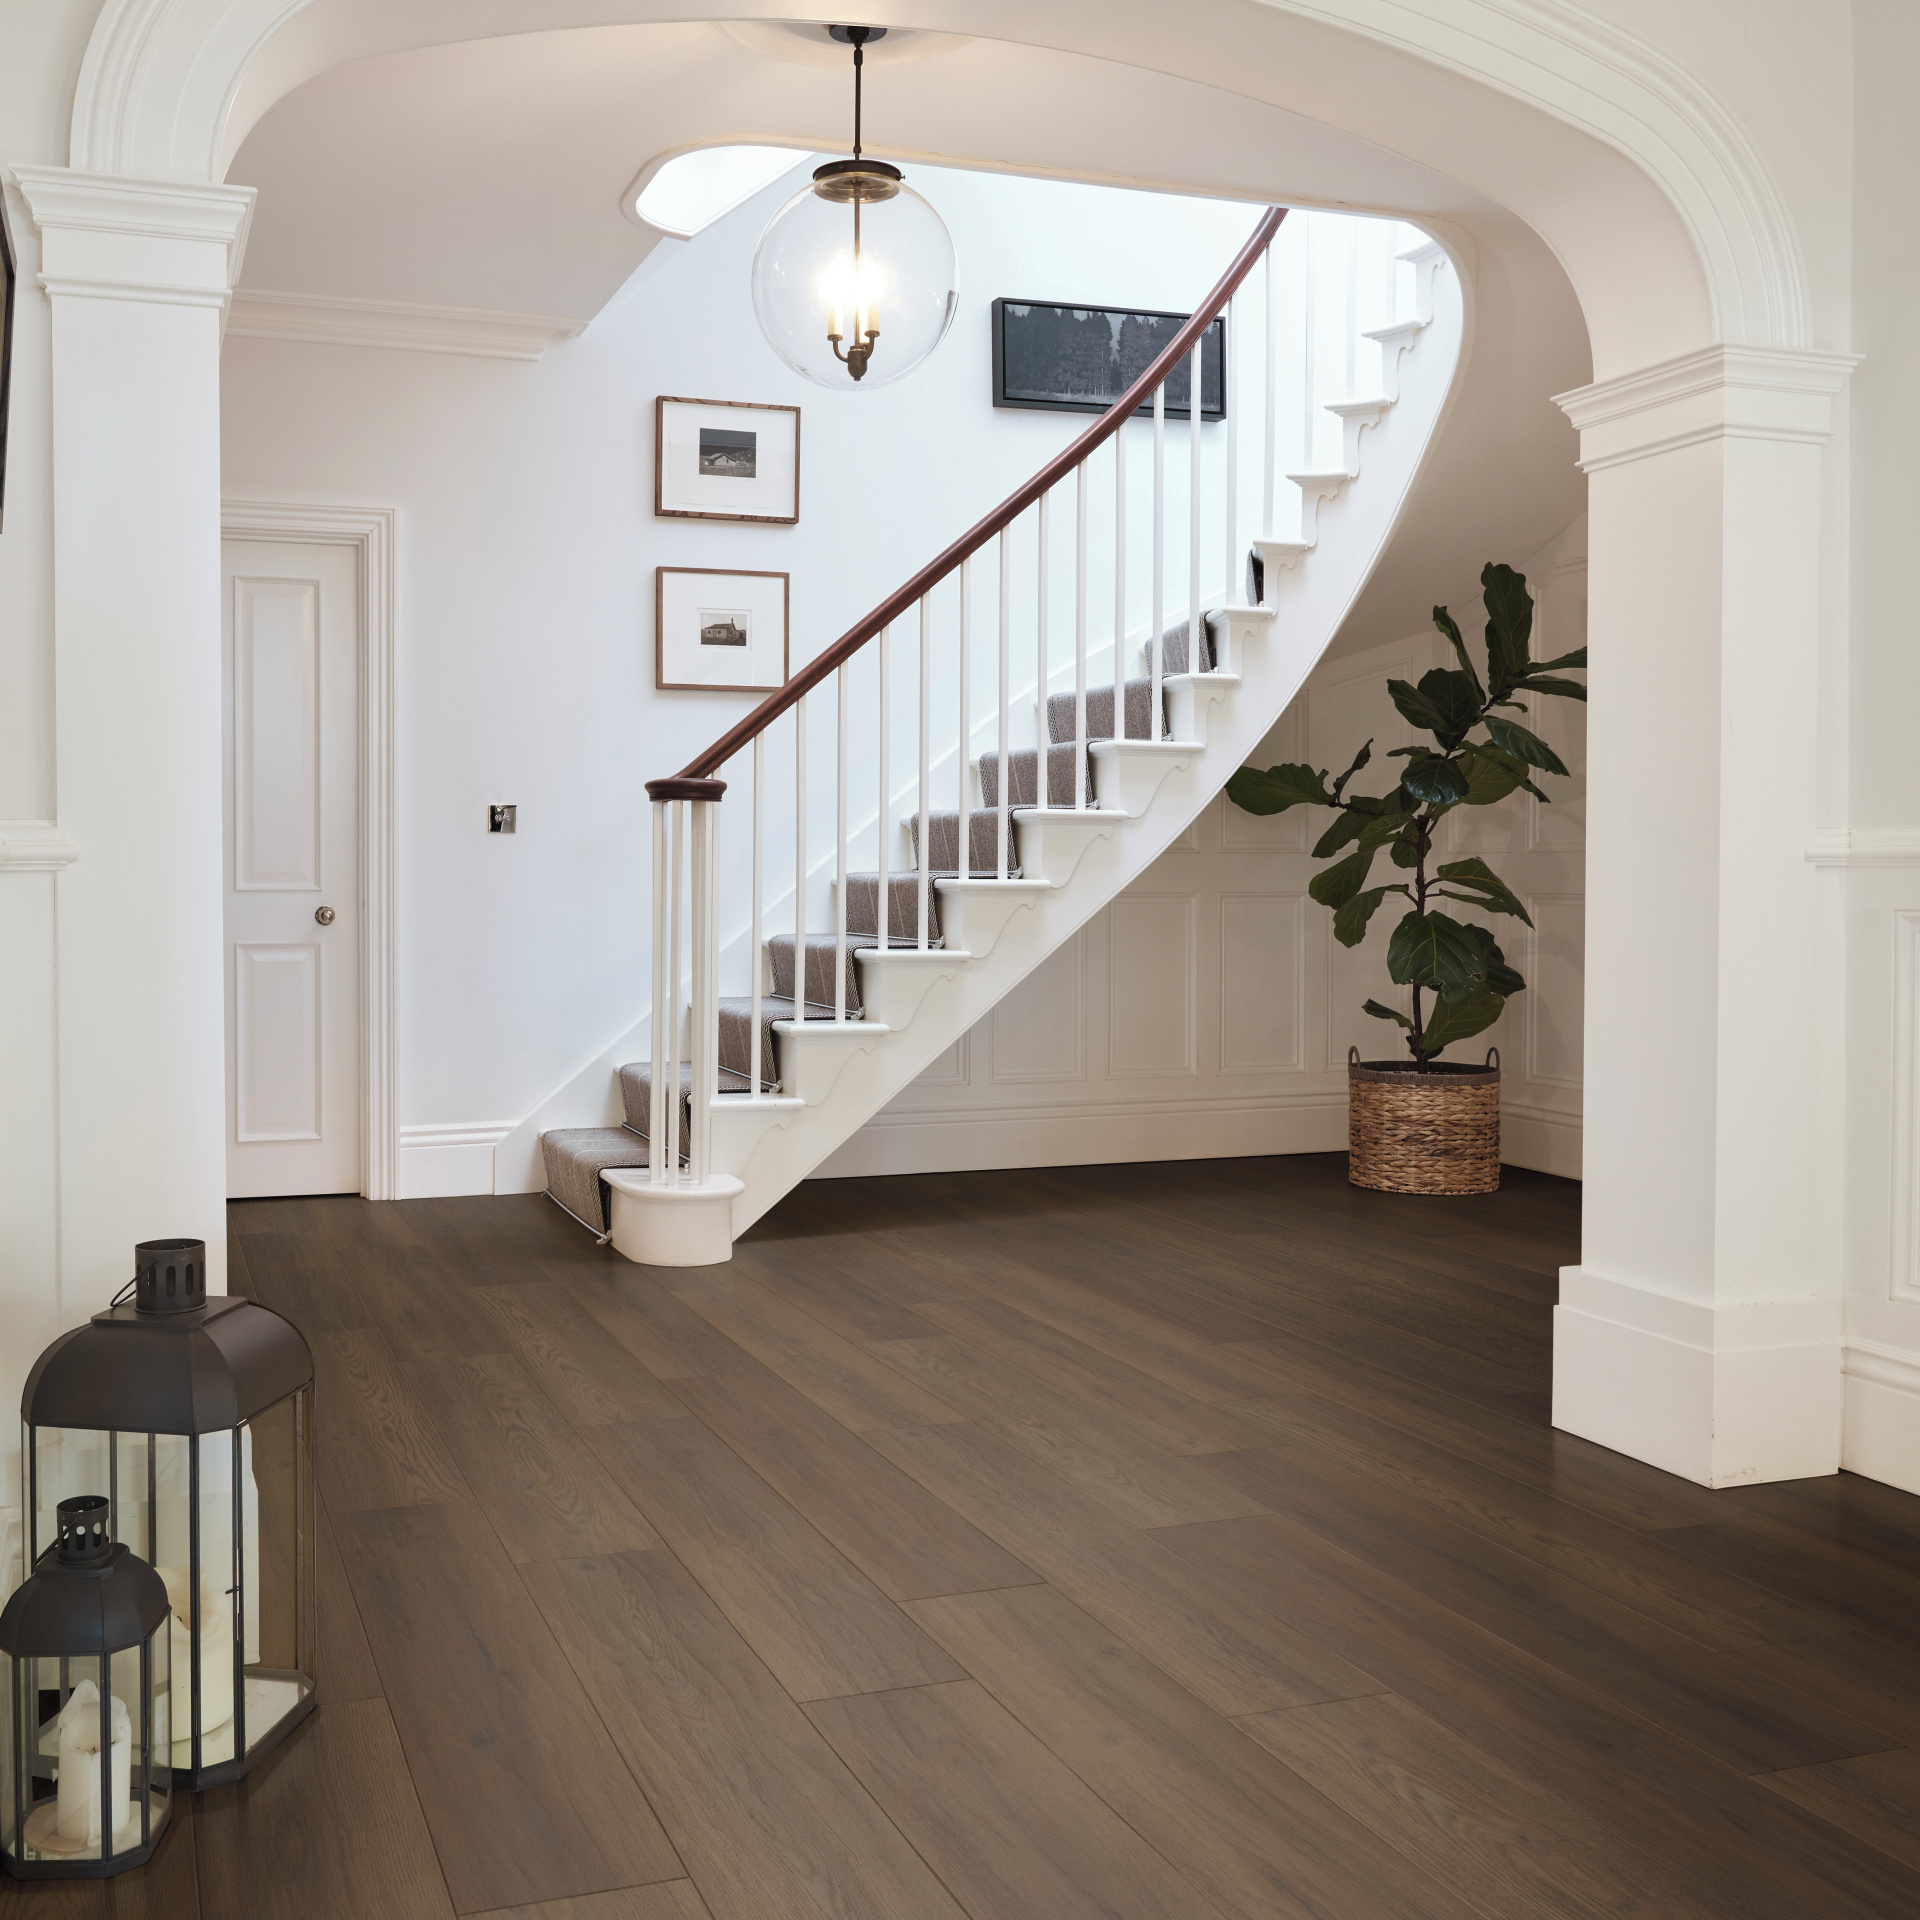 Serrano Oak floors in an elegant entryway